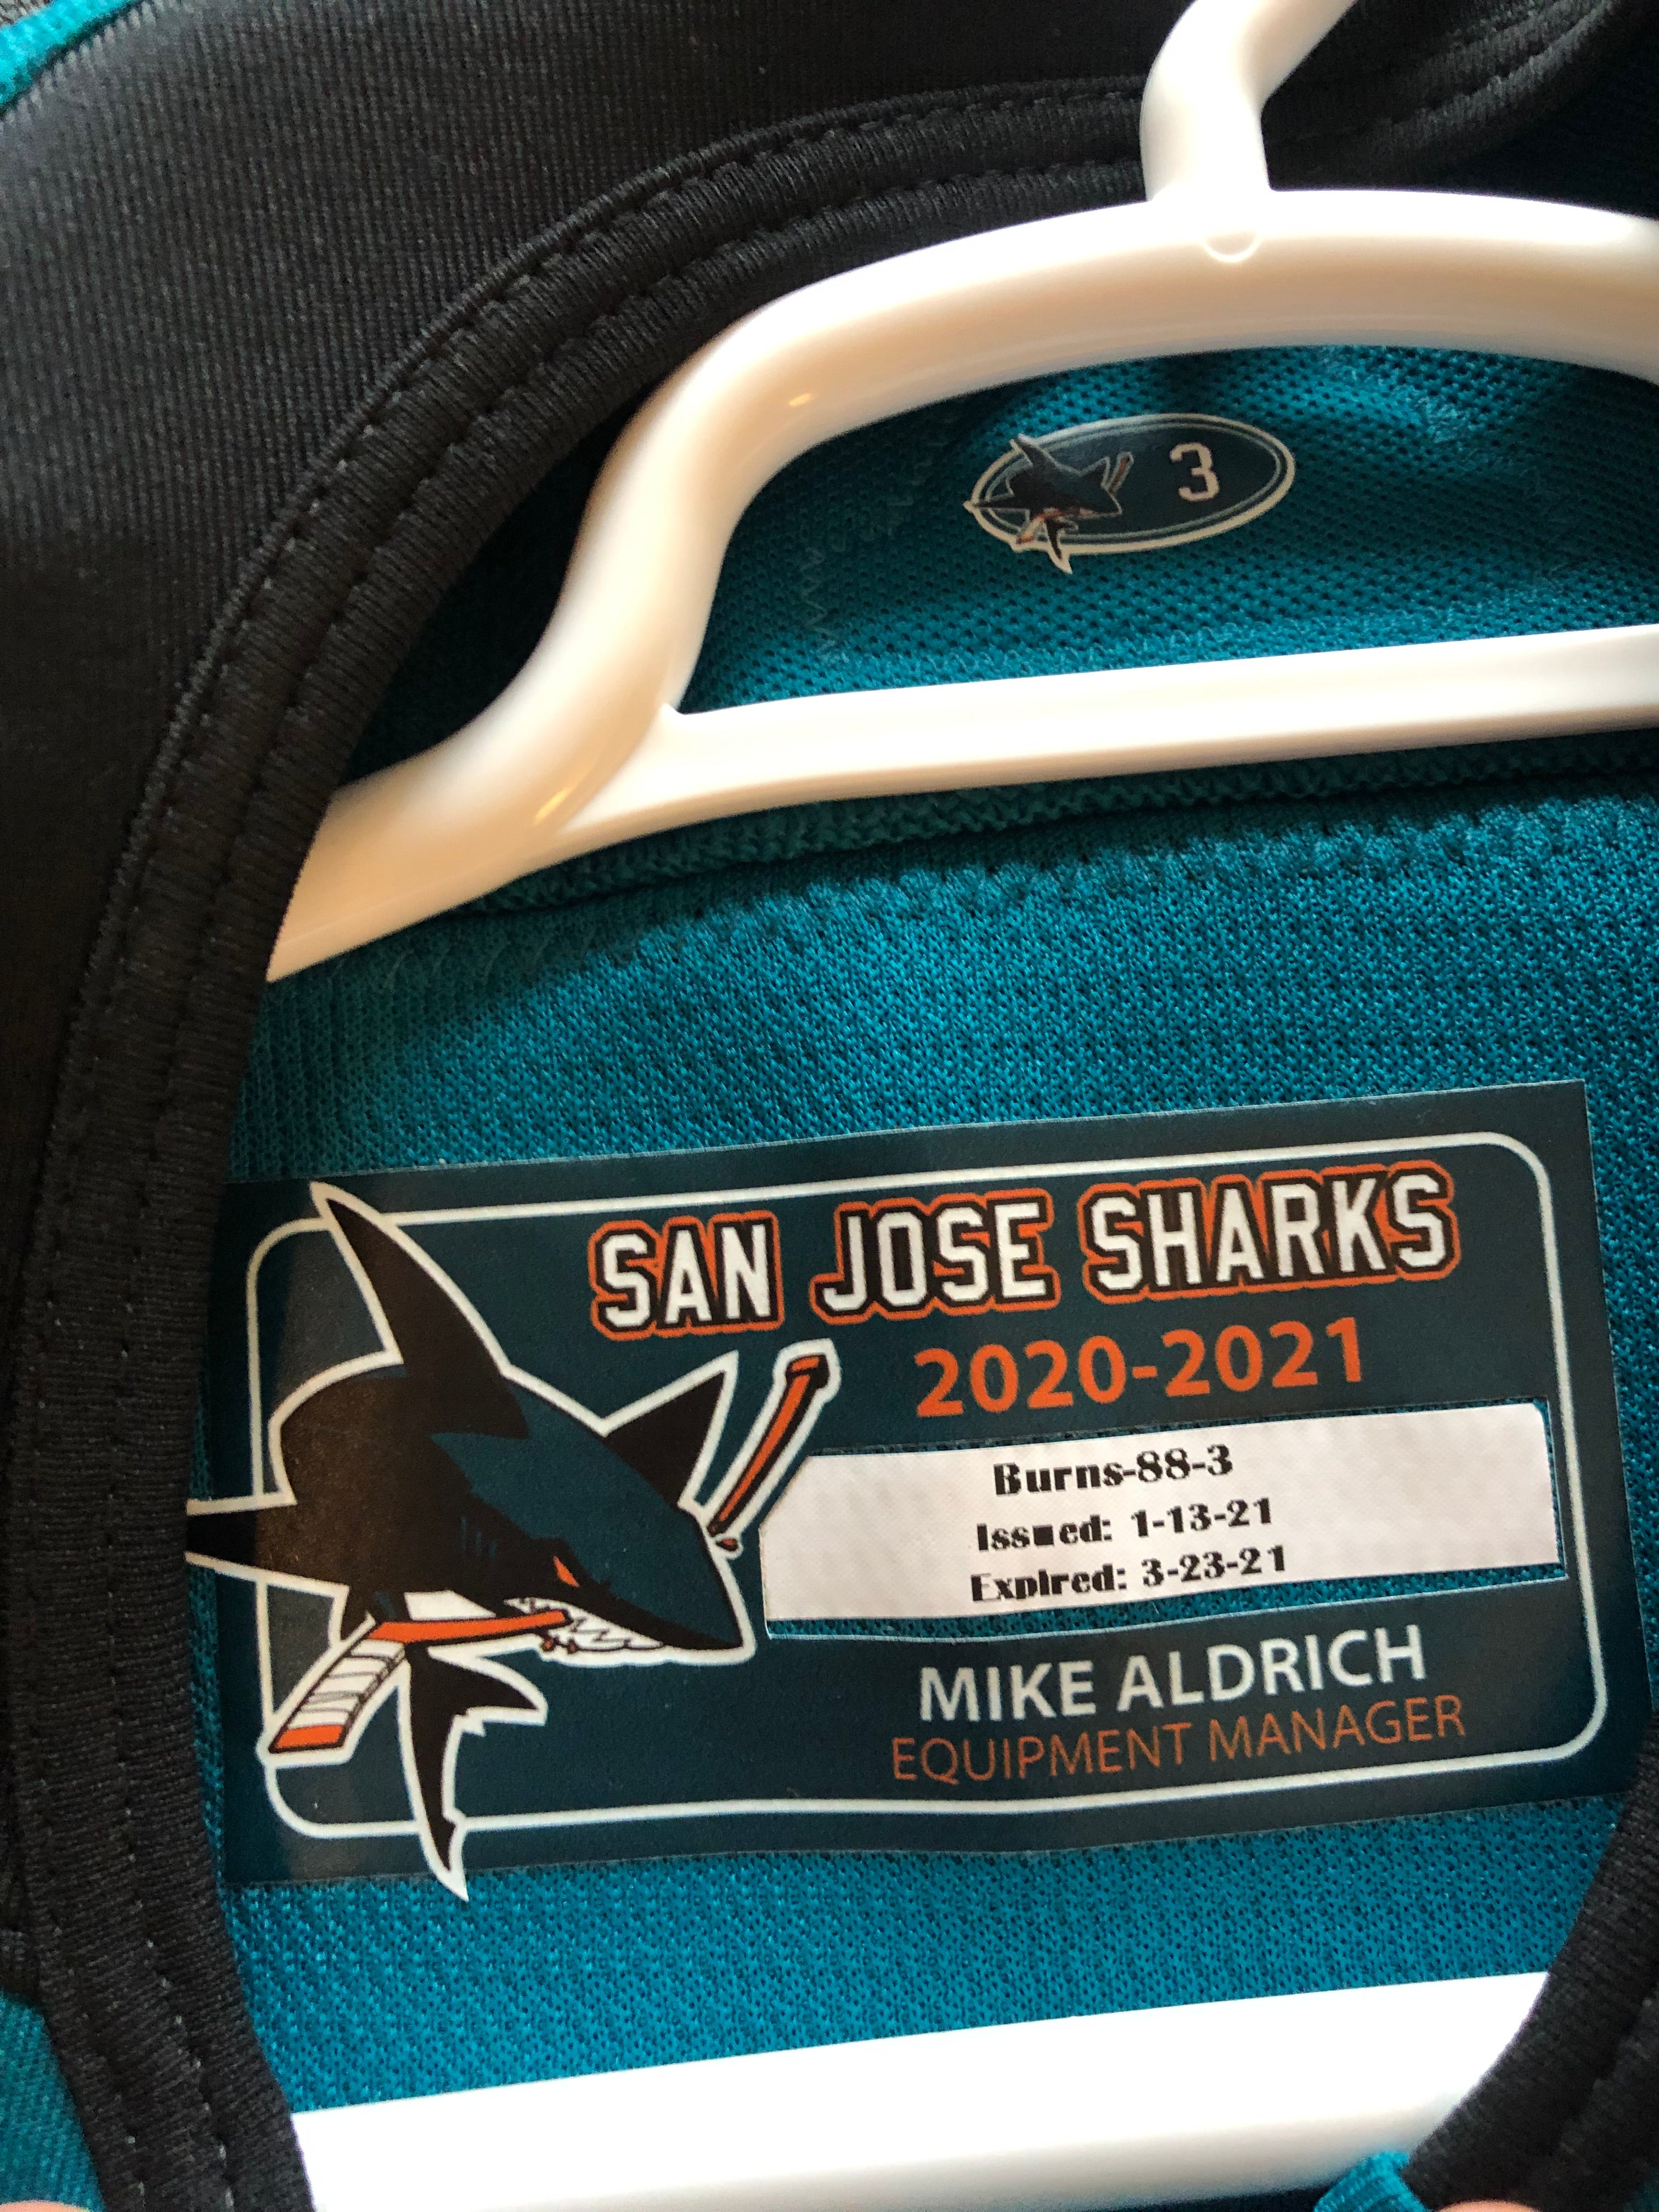 Burns' iconic Sharks jersey